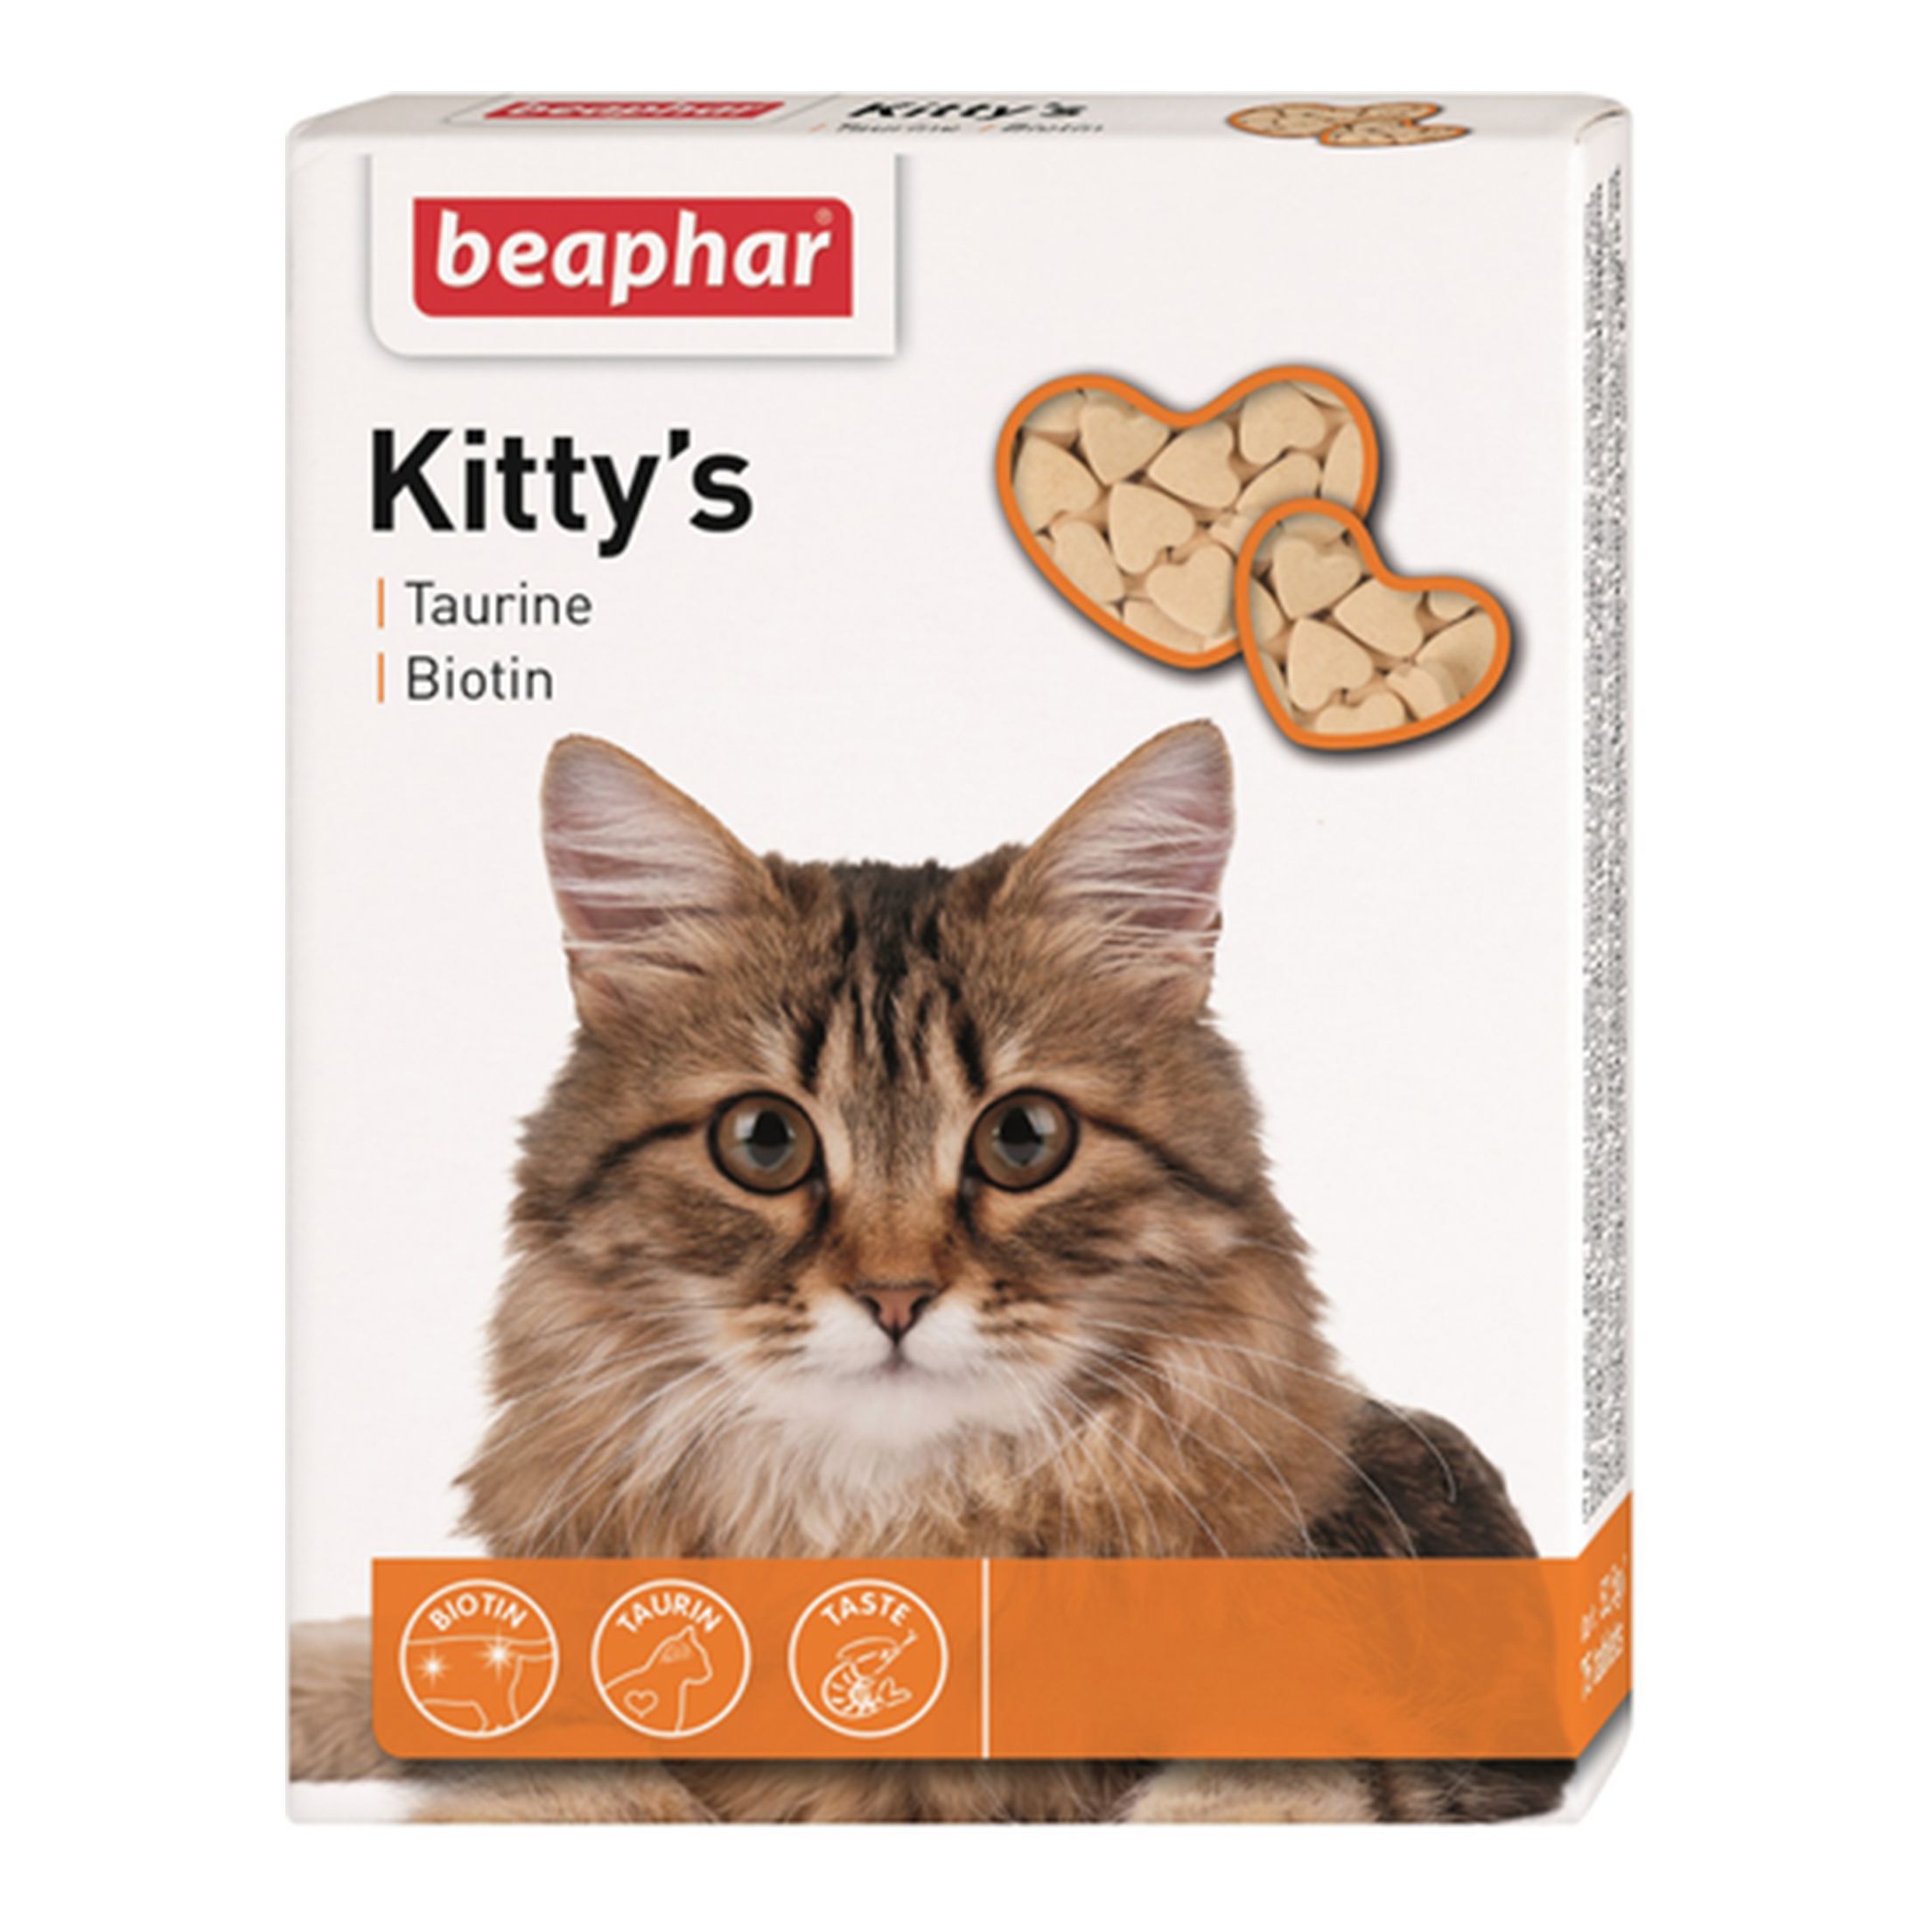 Beaphar Kitty's Taurine+Biotine витаминная добавка для кошек 1